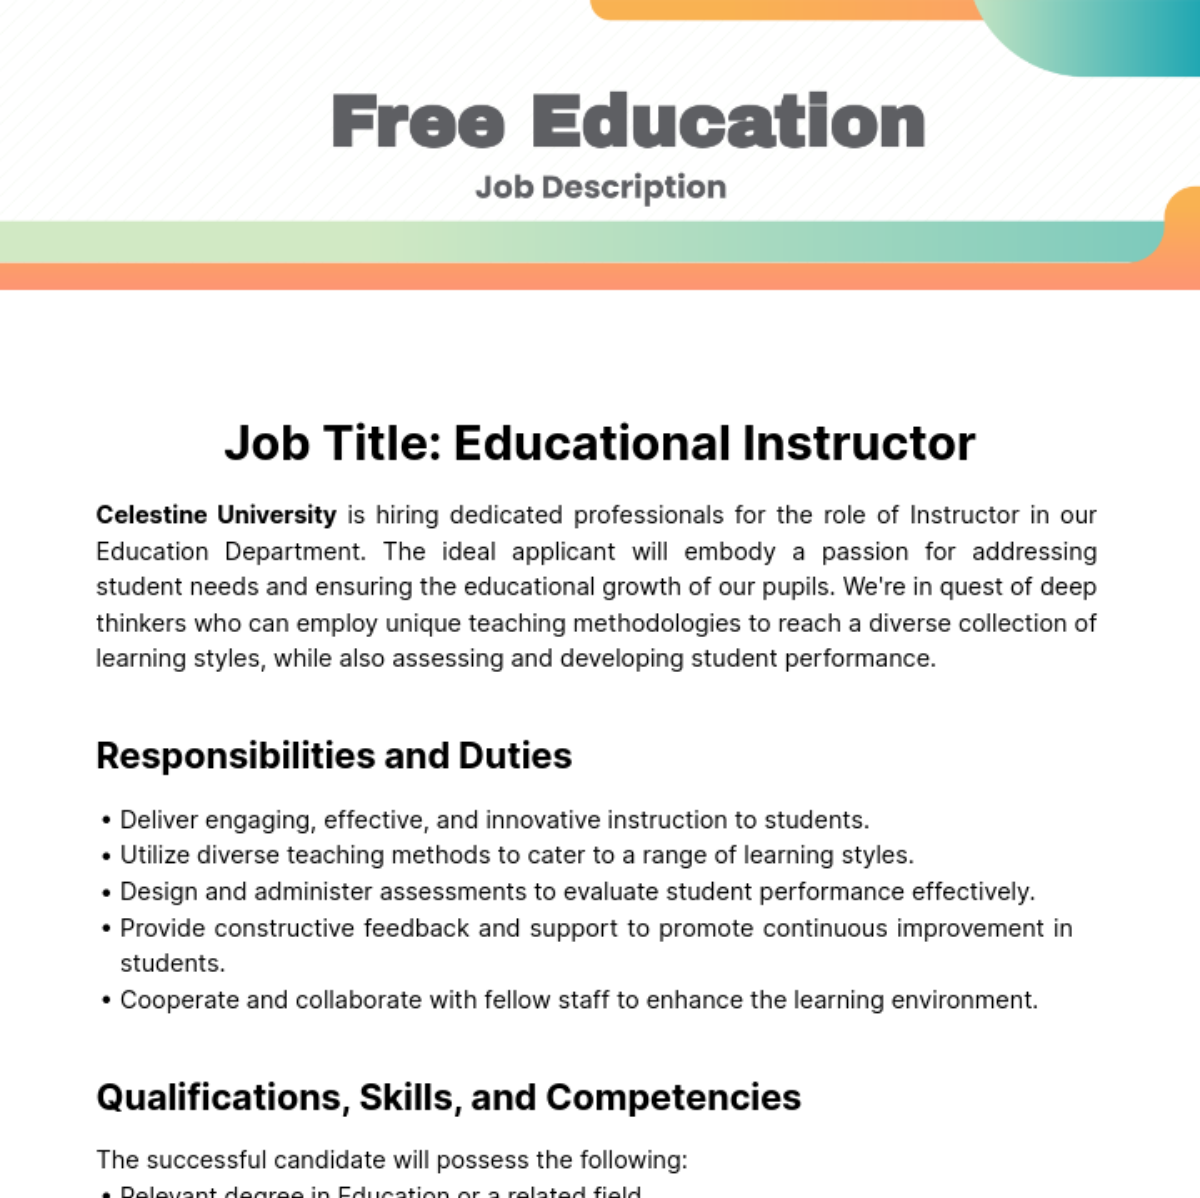 Free Education Job Description Template